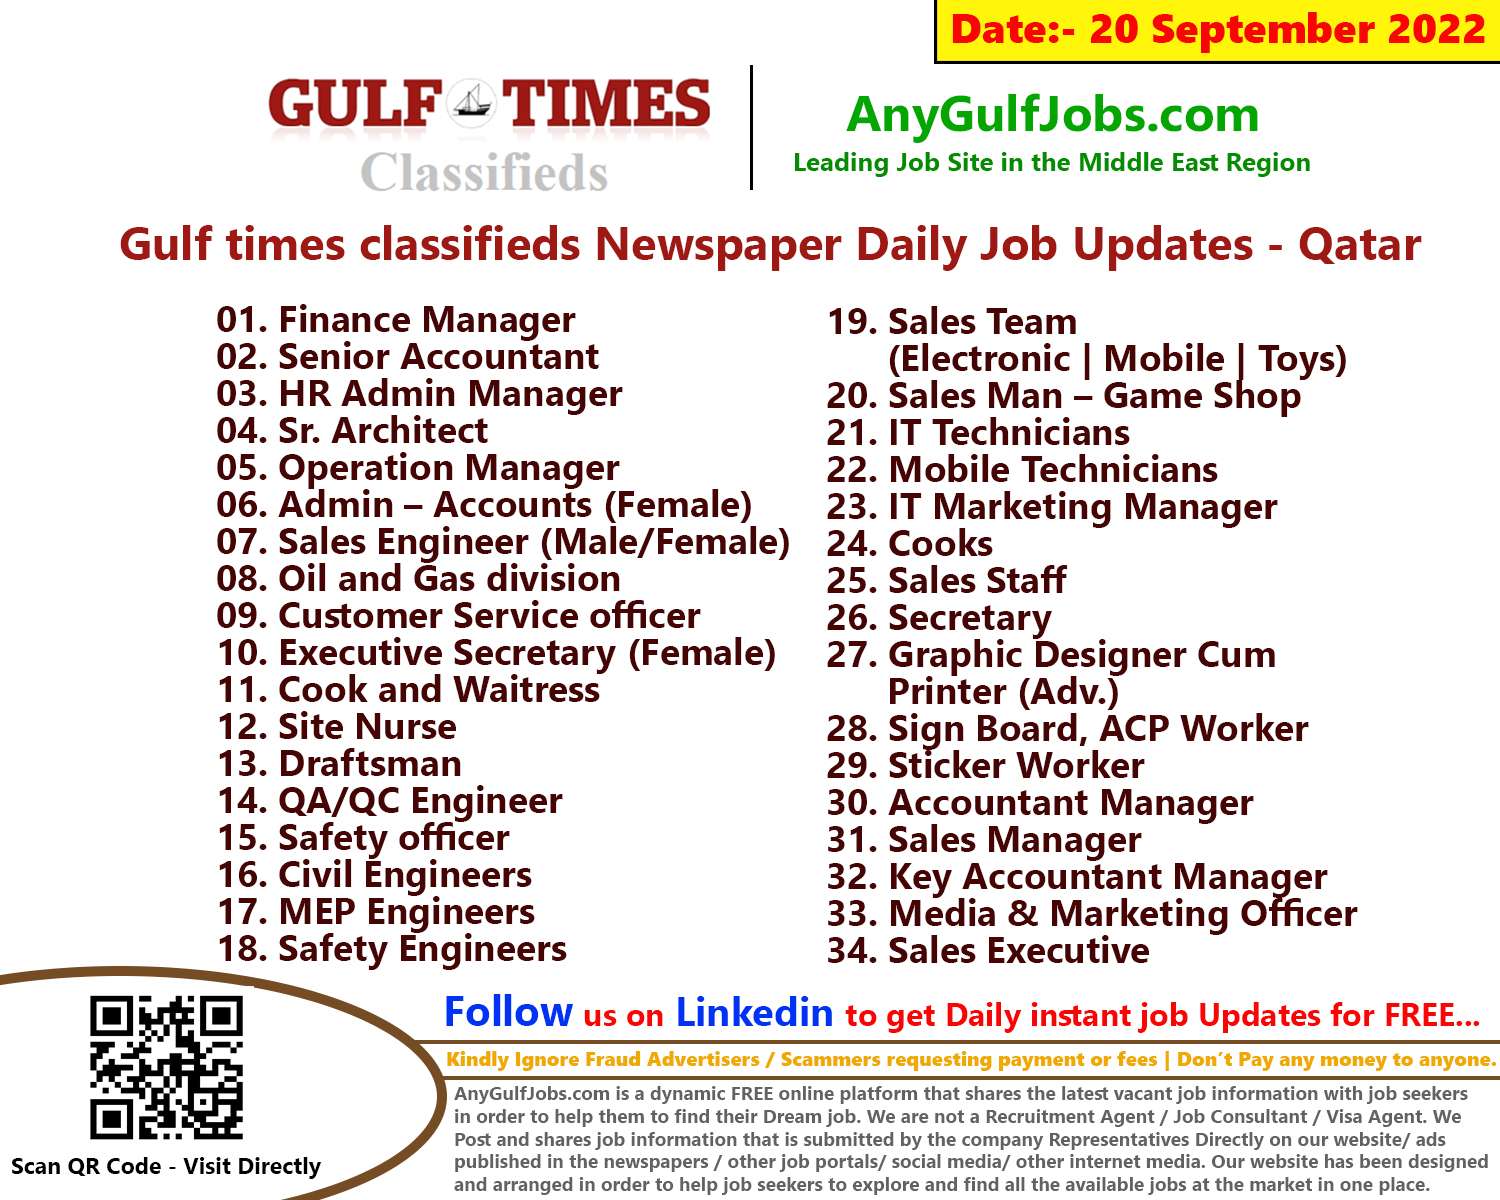 Gulf times classifieds Job Vacancies Qatar - 20 September 2022